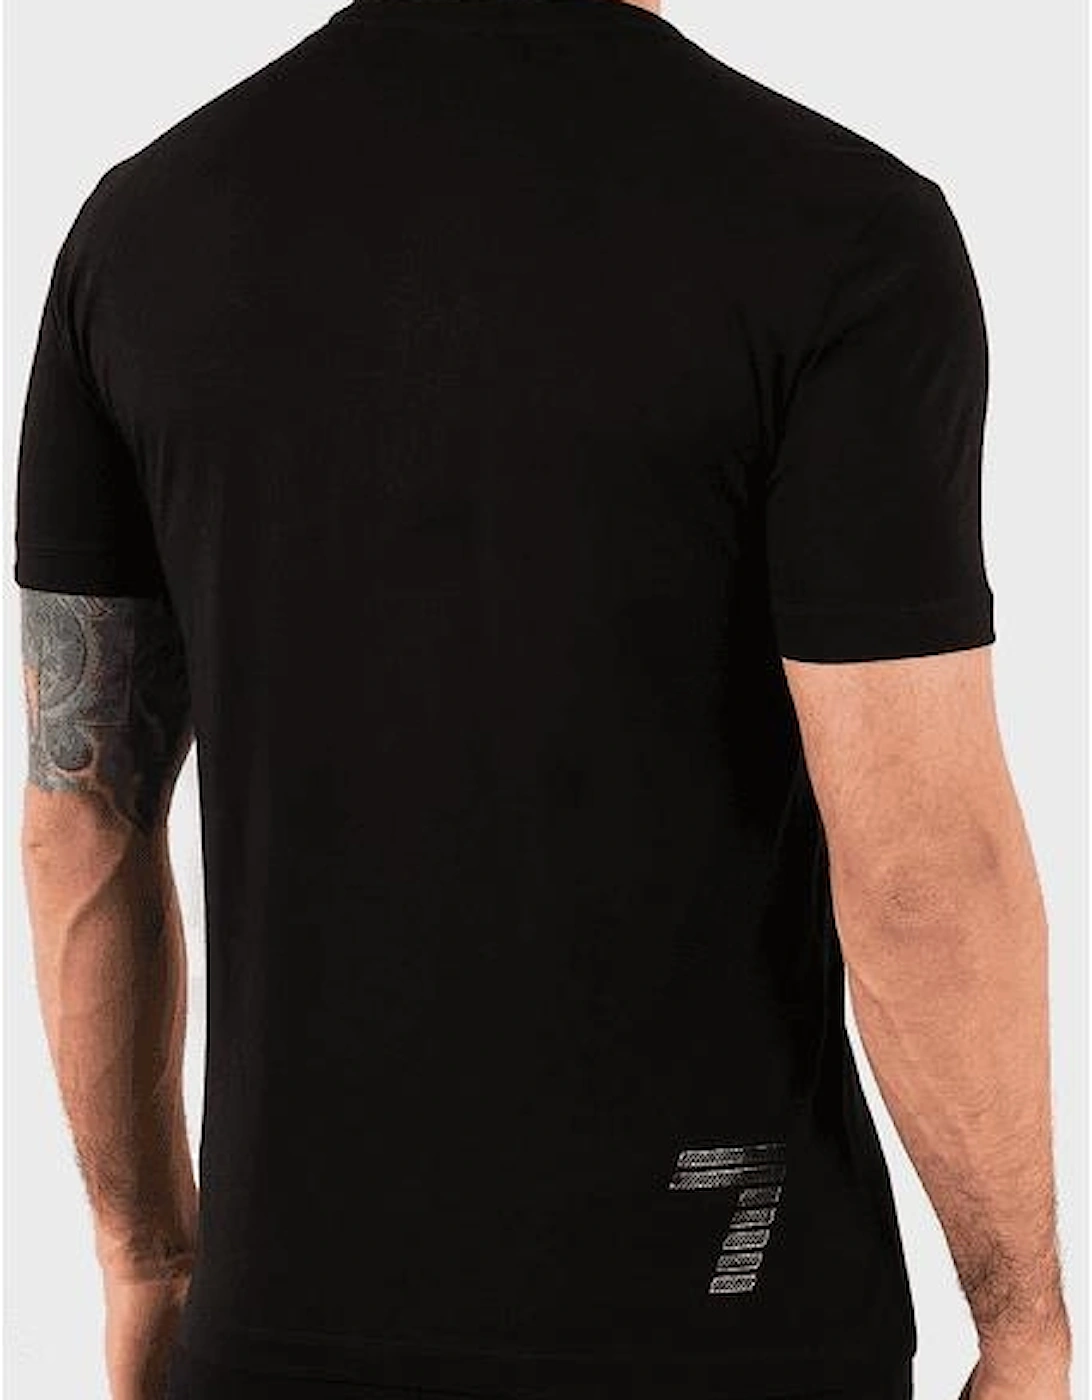 Cotton Lux Raised Logo Black T-Shirt